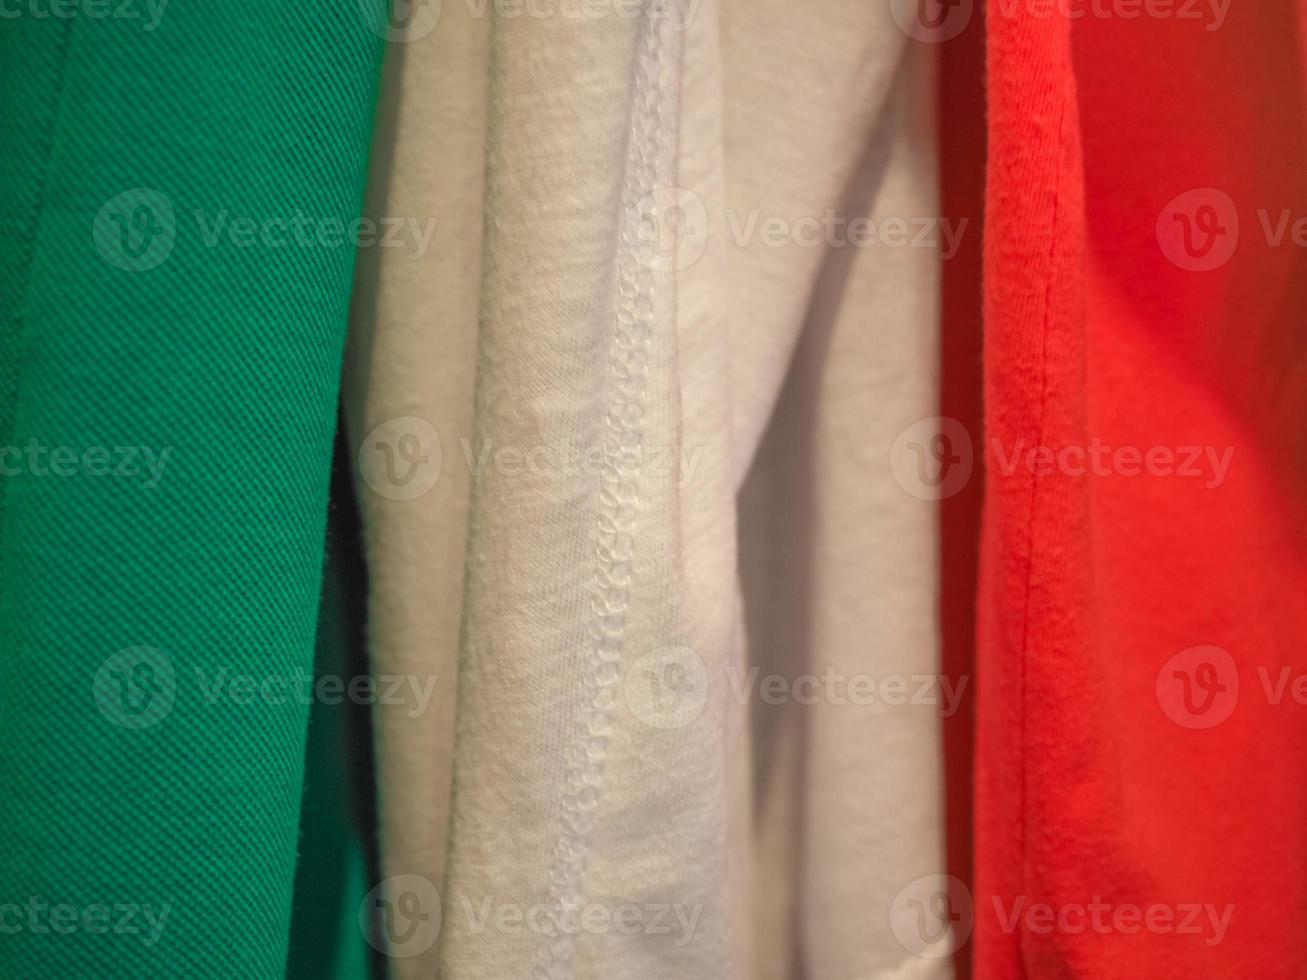 italiensk flagga i Italien foto